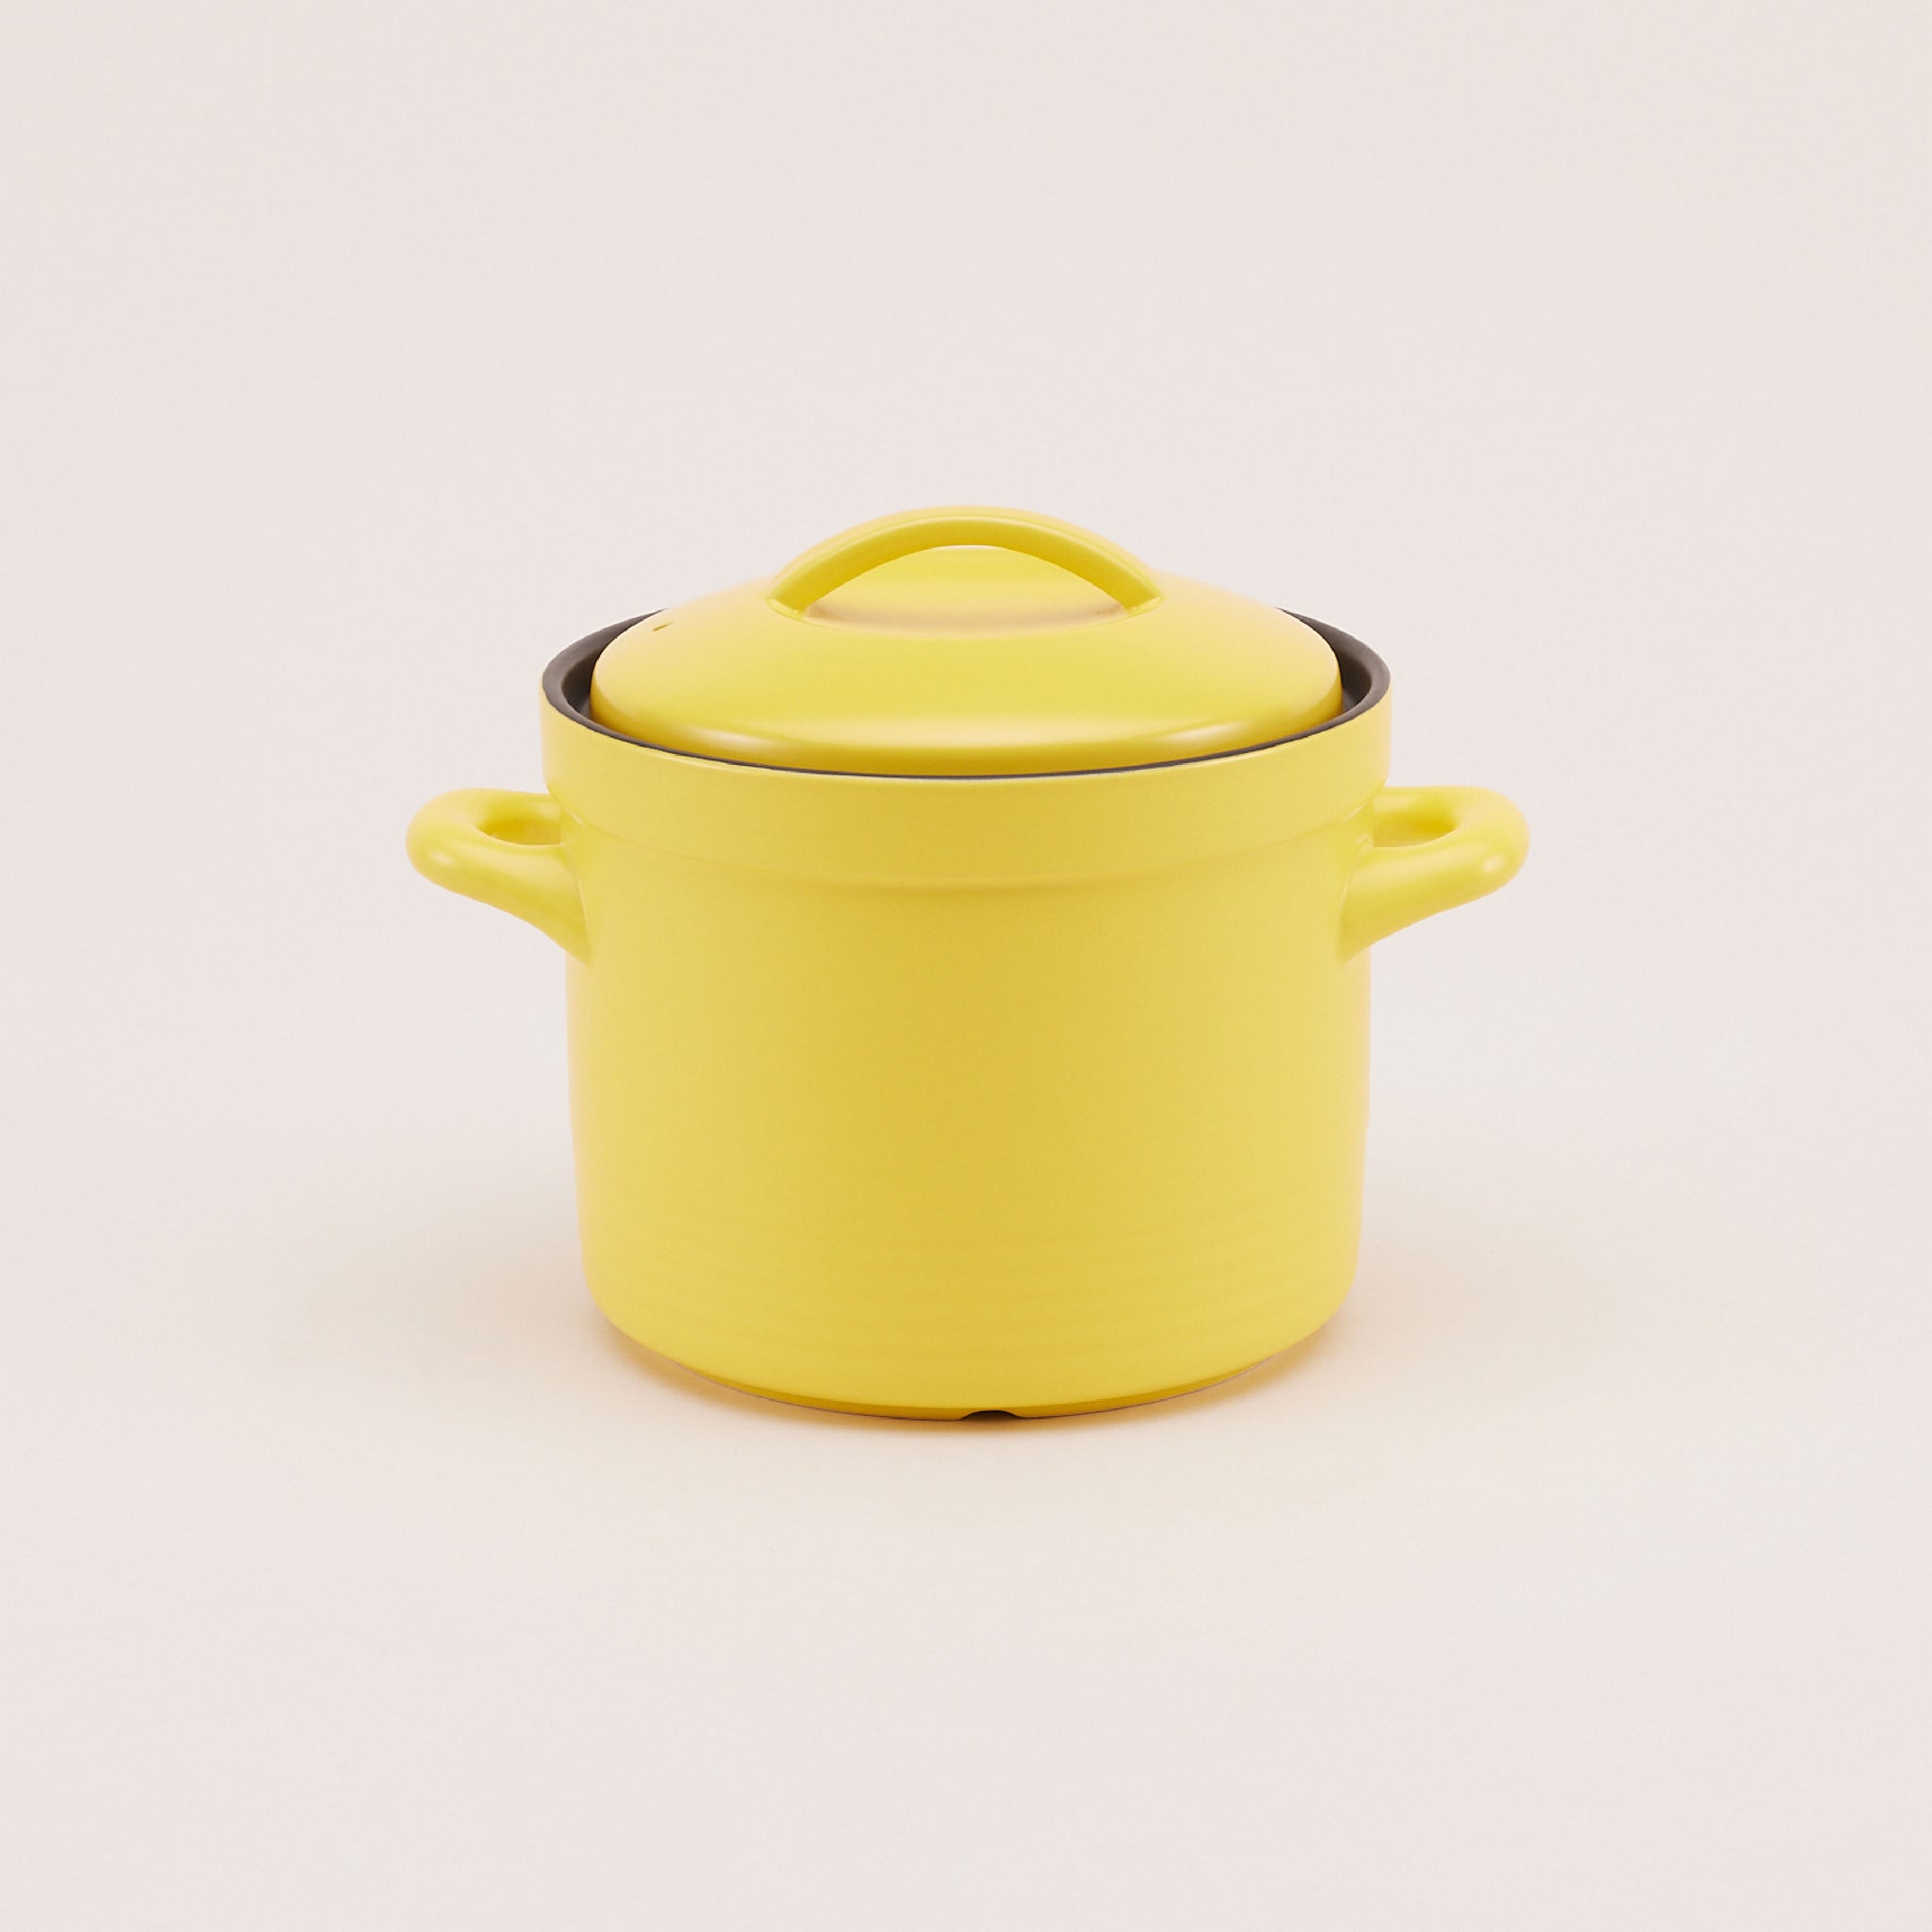 Ceramic Cooking Pot With Lid -3 Litre | หม้อพร้อมฝาปิด